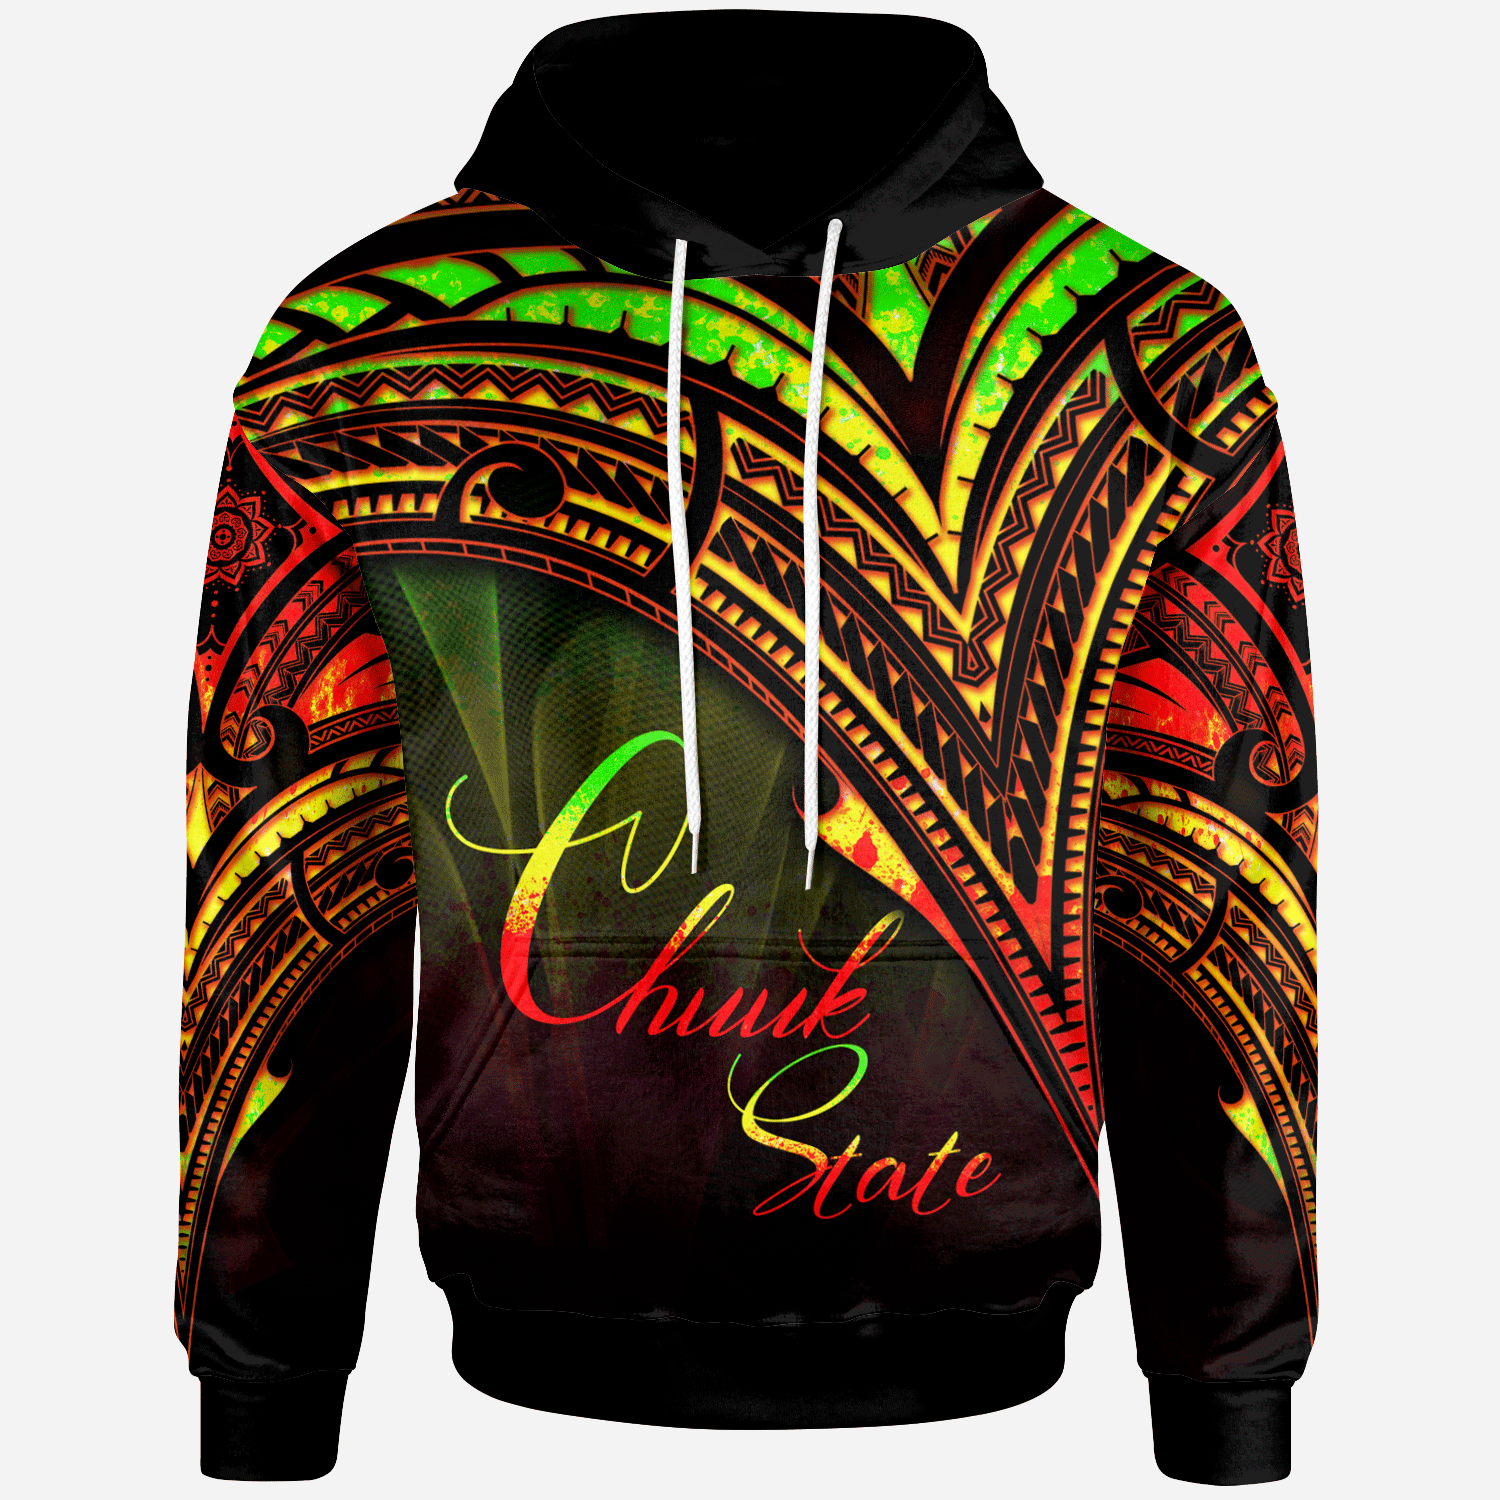 Chuuk State Hoodie Reggae Color Cross Style